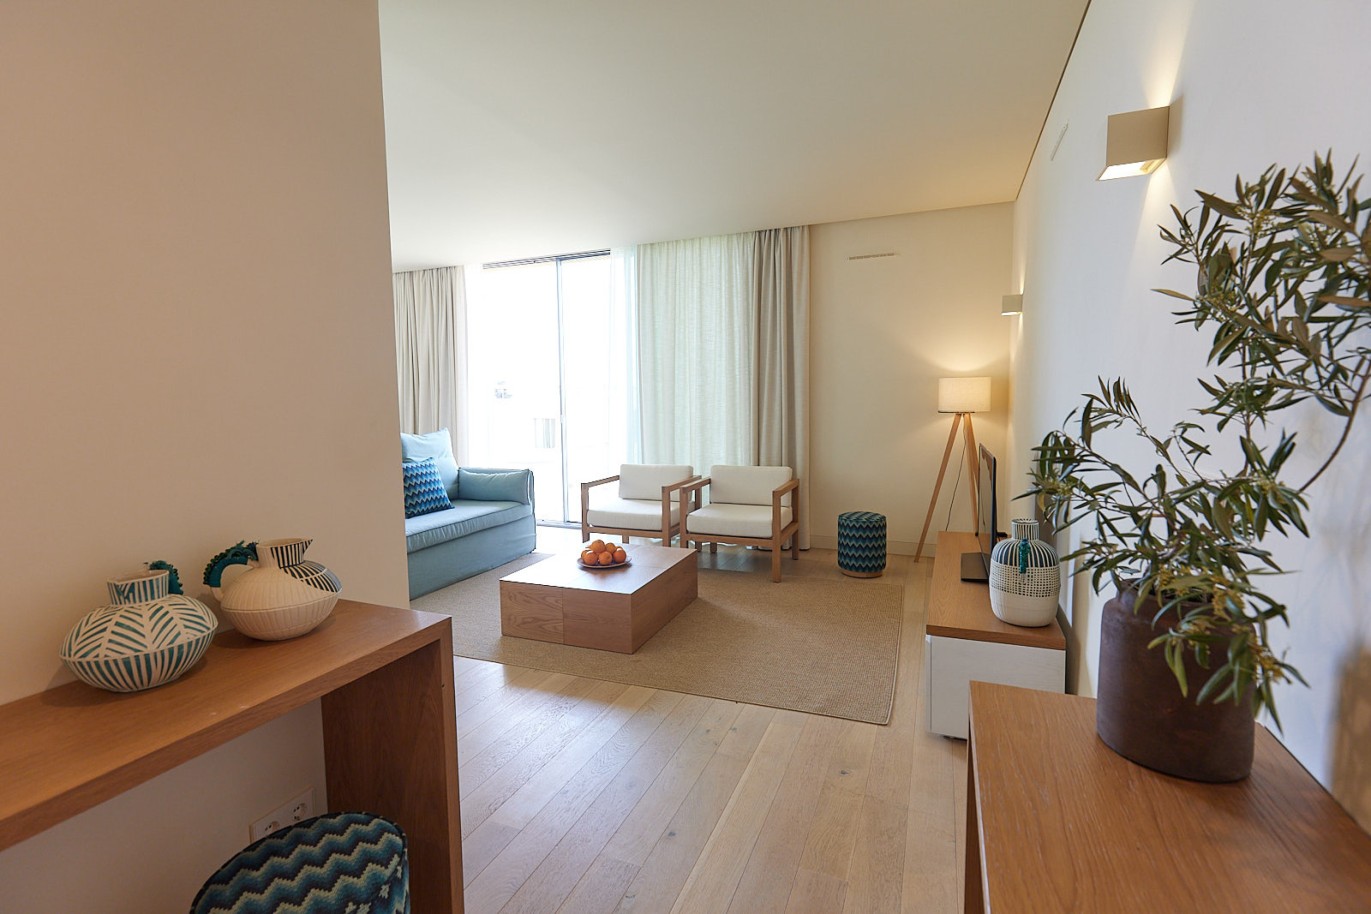 2 bedroom apartment in resort, for sale in Porches, Algarve_228780